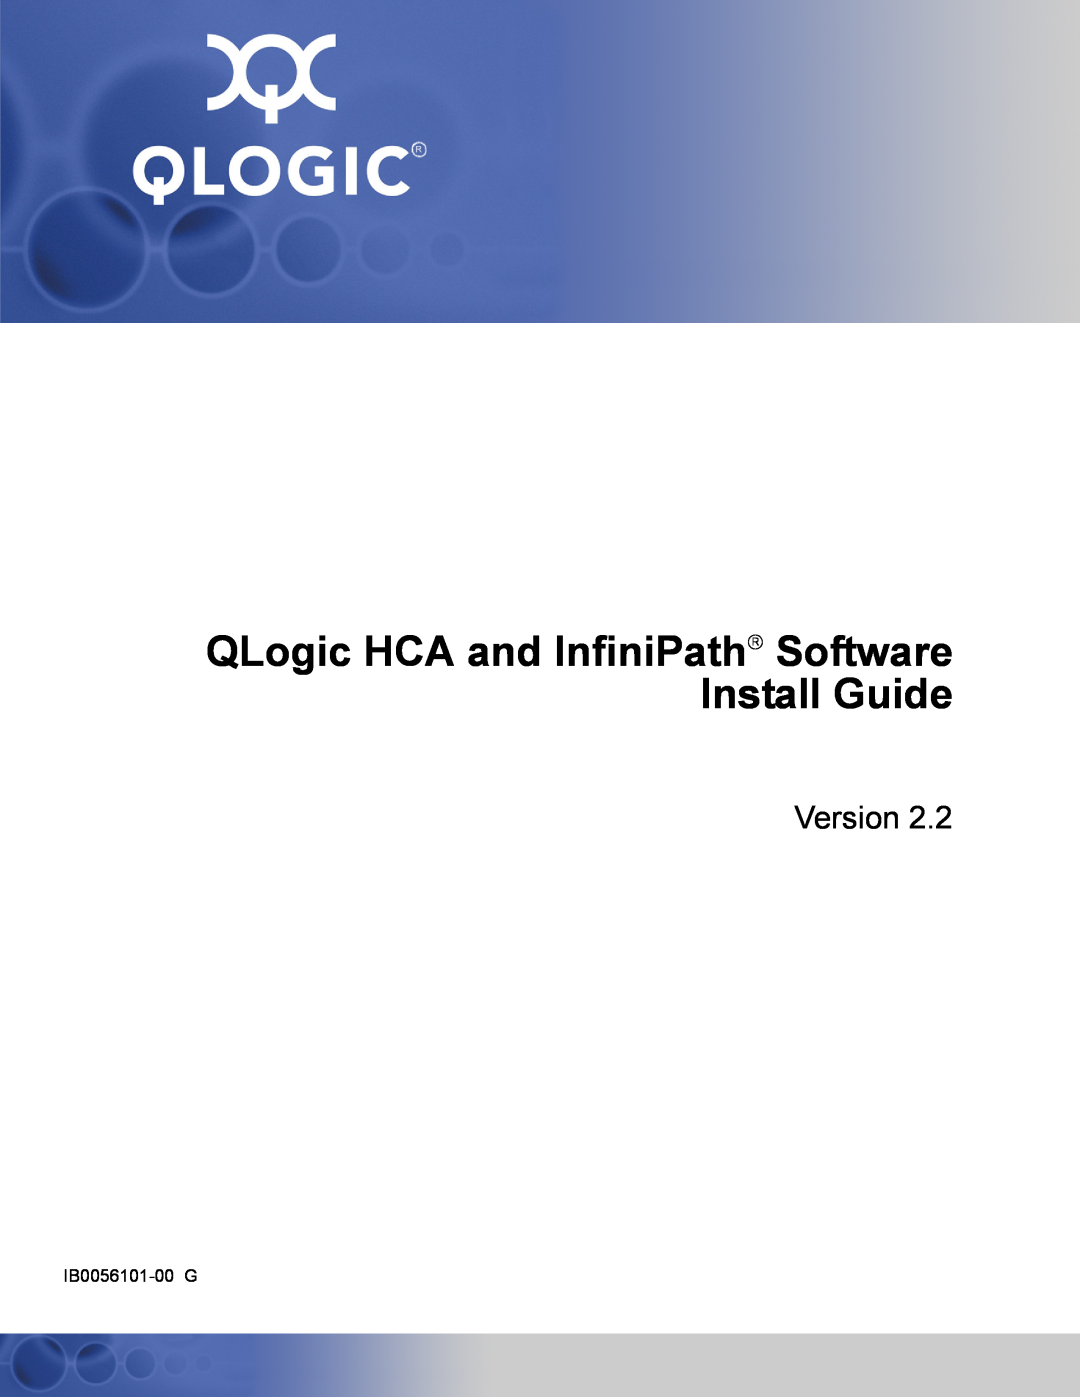 Q-Logic IB0056101-00 G manual QLogic HCA and InfiniPath→ Software Install Guide, Version 